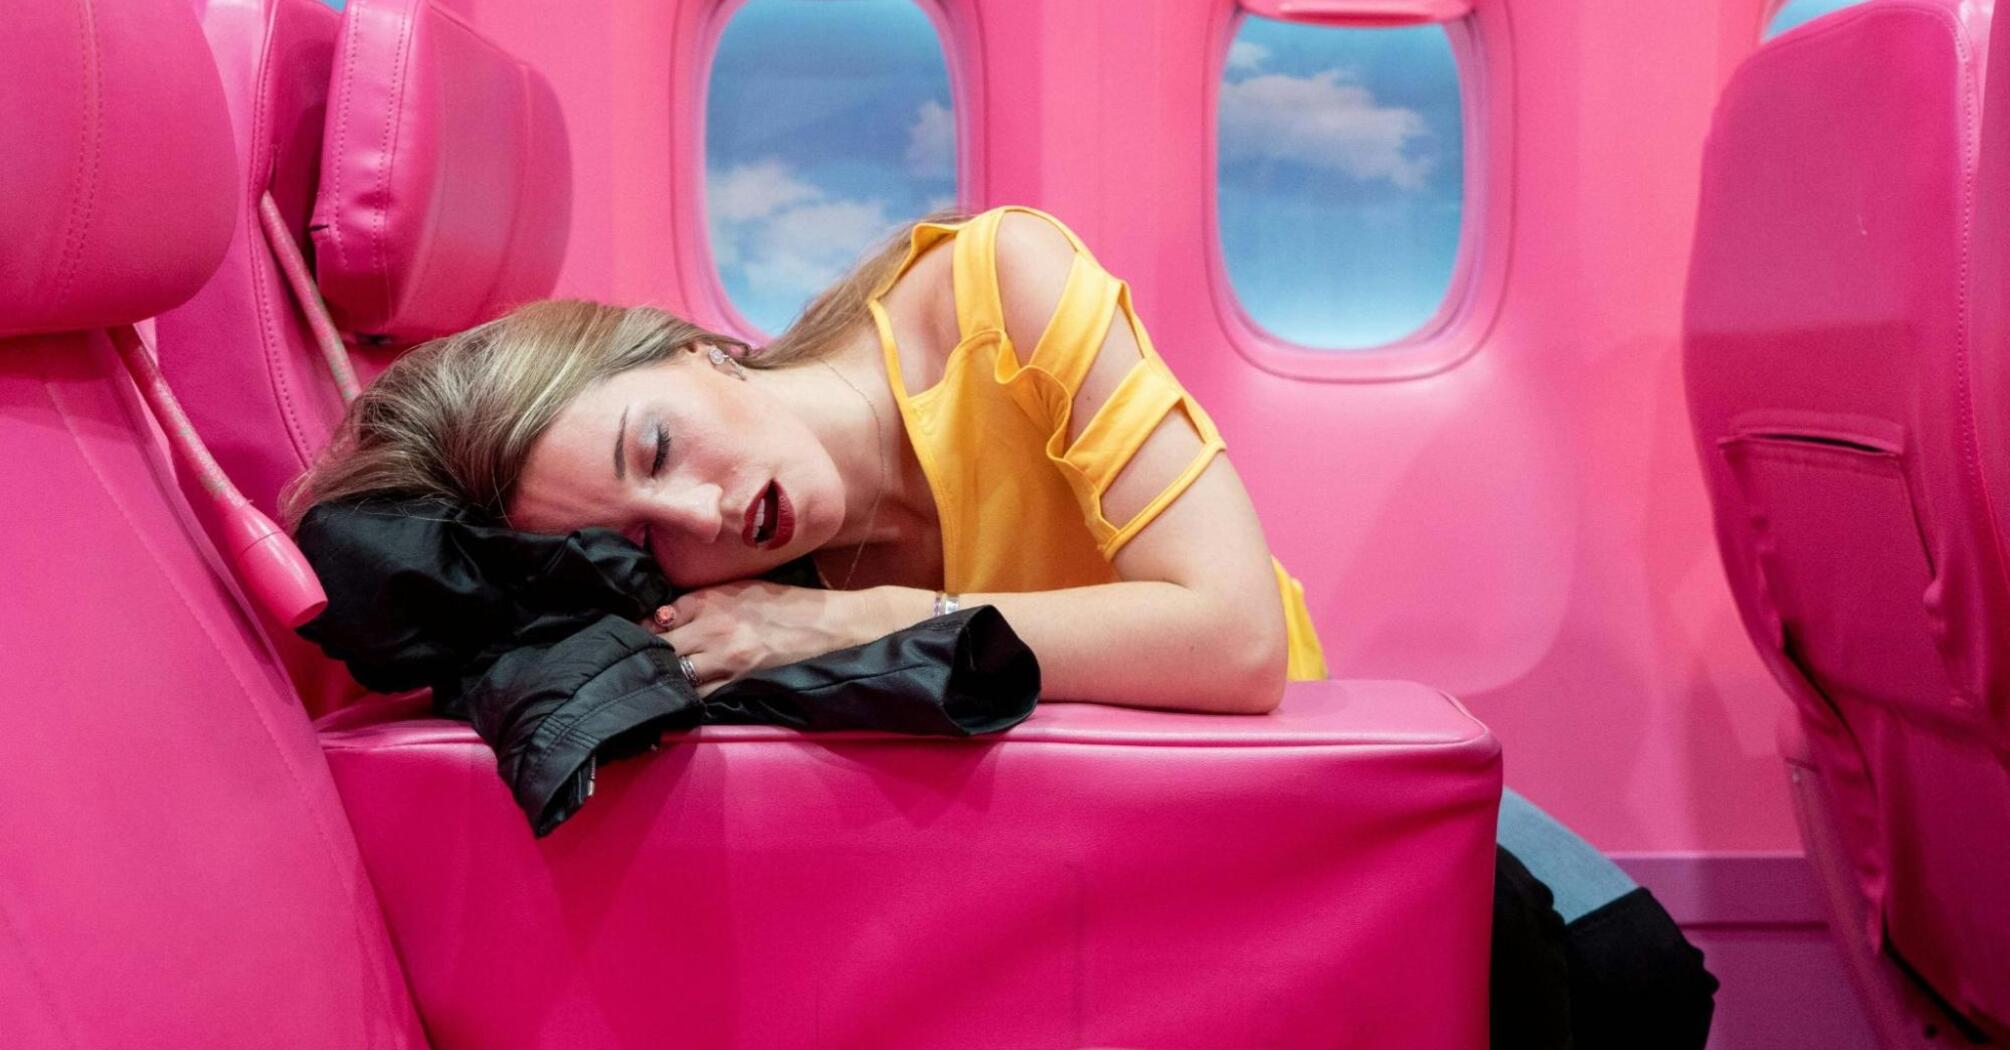 Sleeping woman on board an airplane